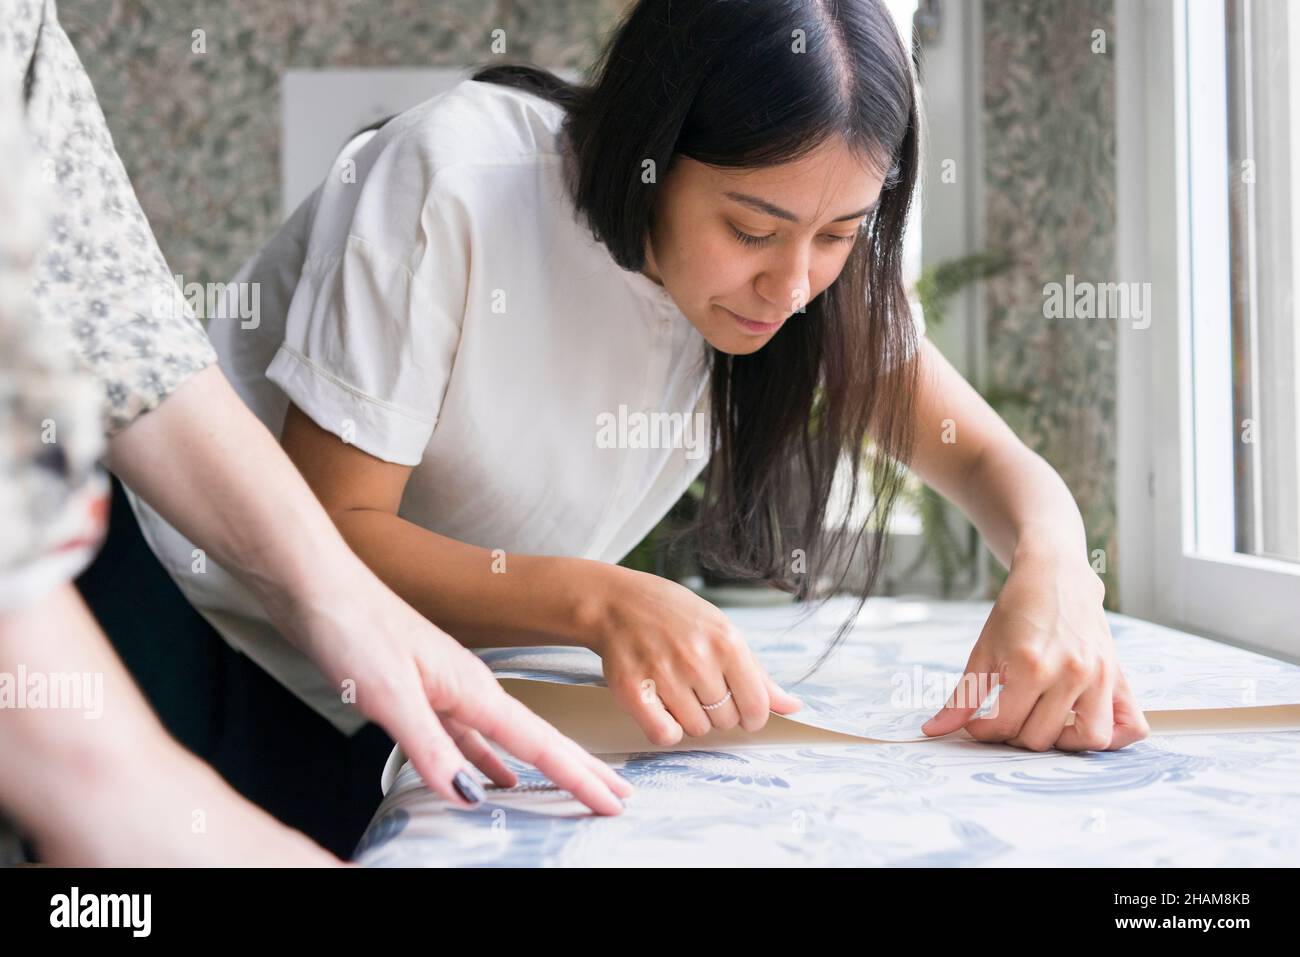 Woman checking pattern on wallpaper Stock Photo